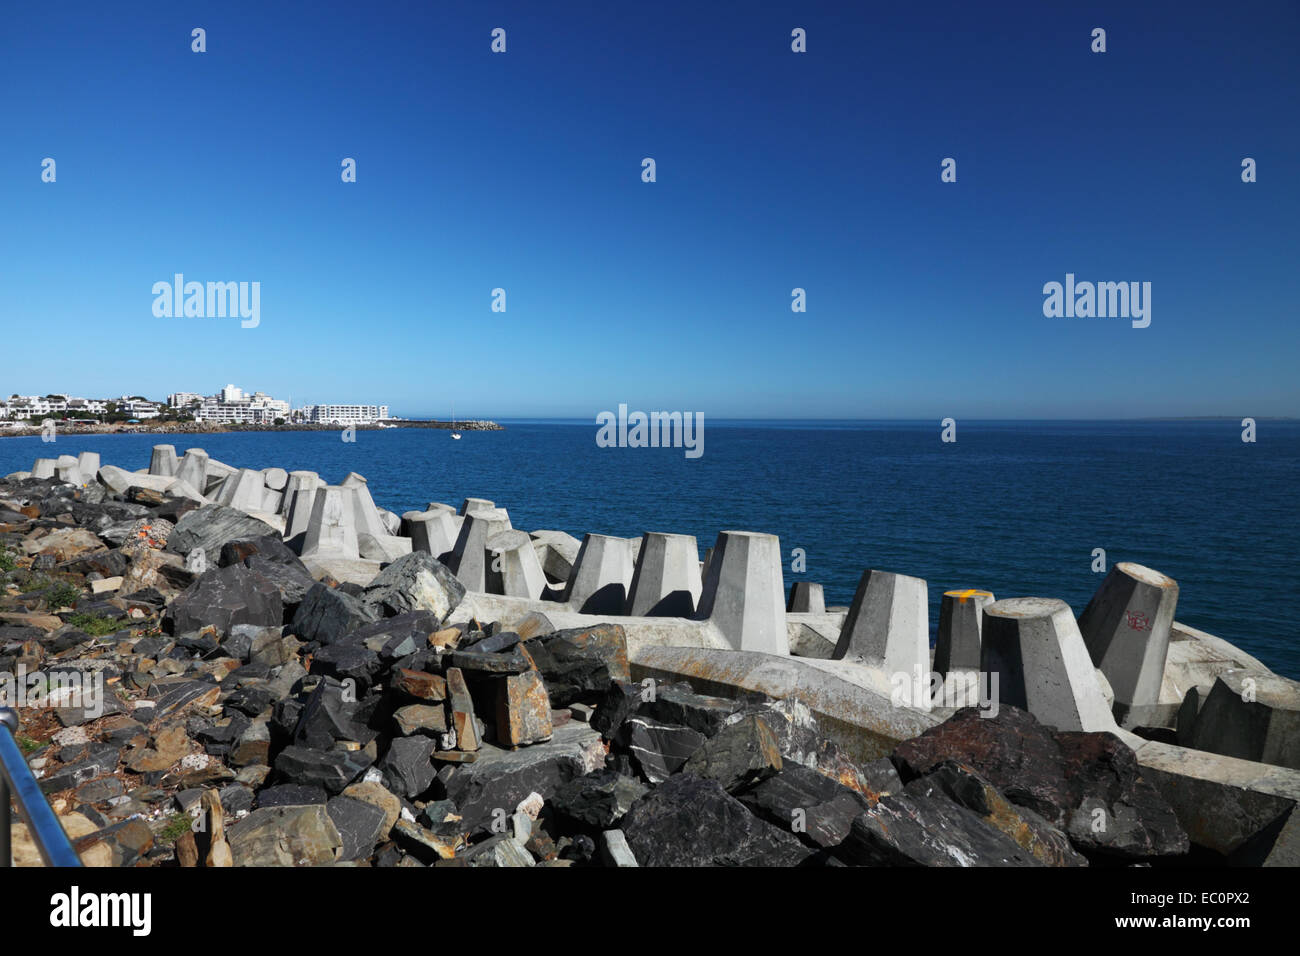 Granger Bay, Mouille Point, Cape Town, South Africa.  Showing concrete tetrapod revetments and rip-rap coastal defences. Stock Photo